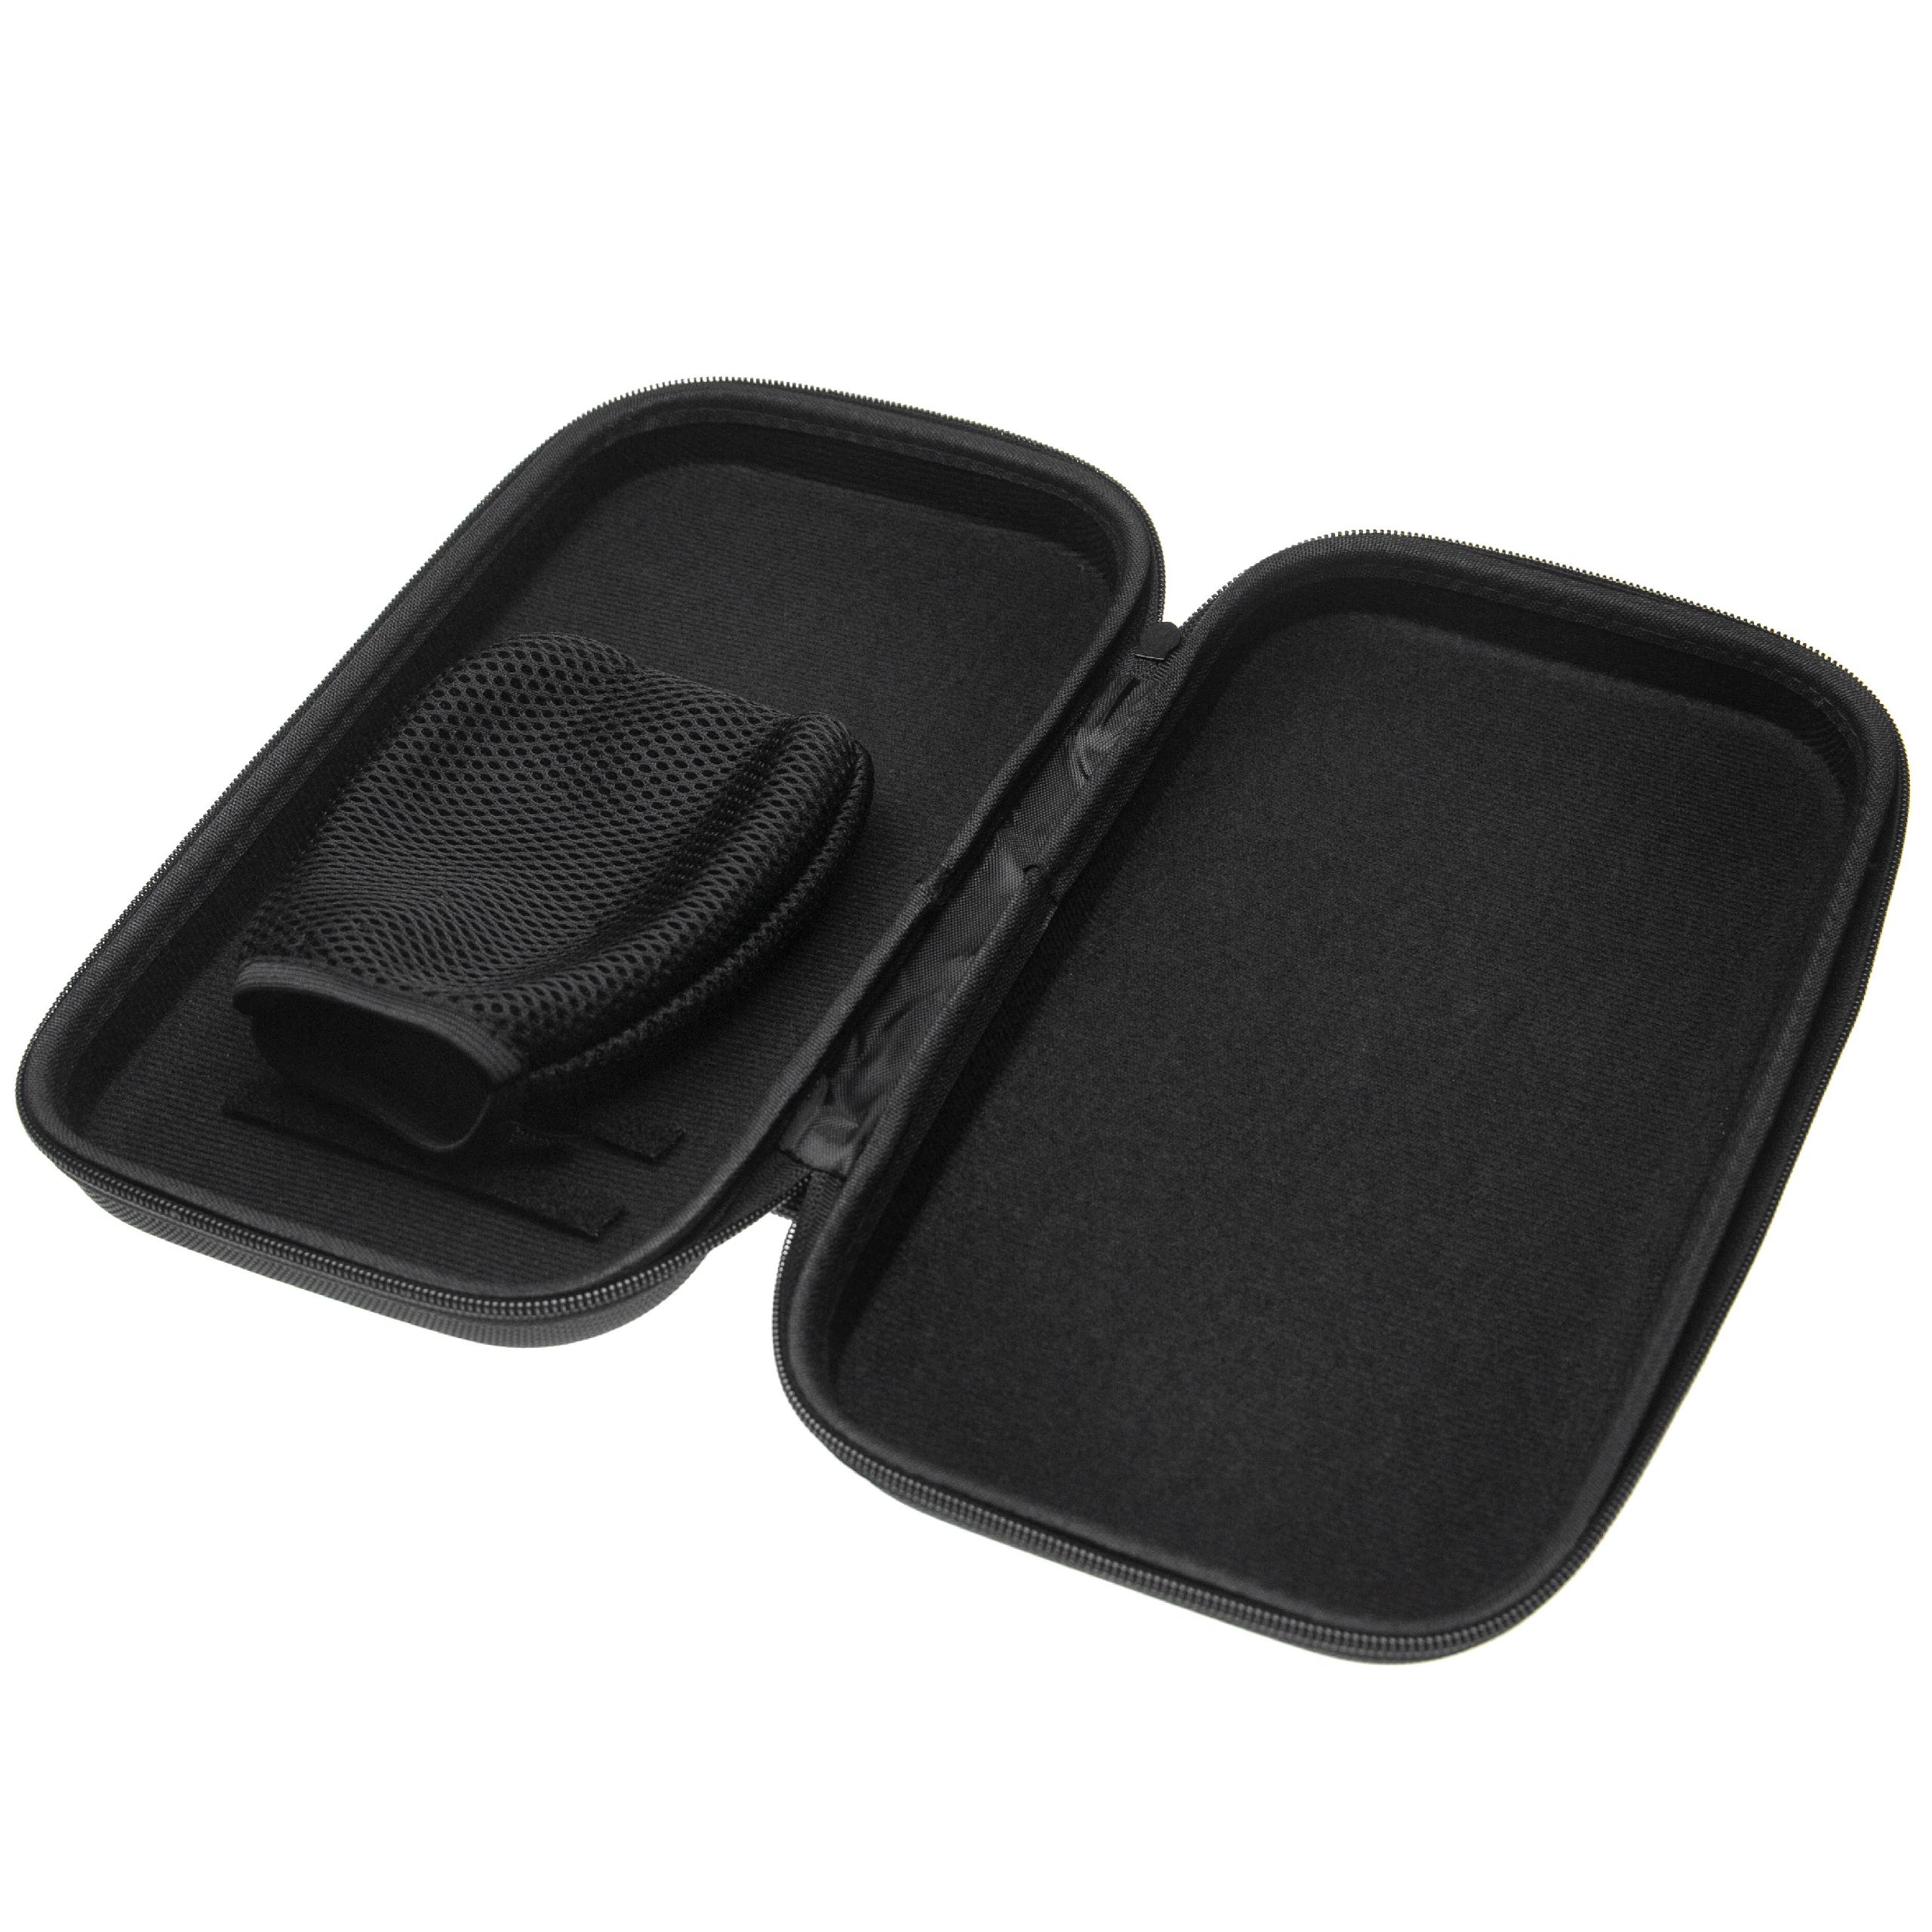 vhbw Storage CaseHair Curler & Hair Waver Accessories - Travel Bag, Organiser, Black